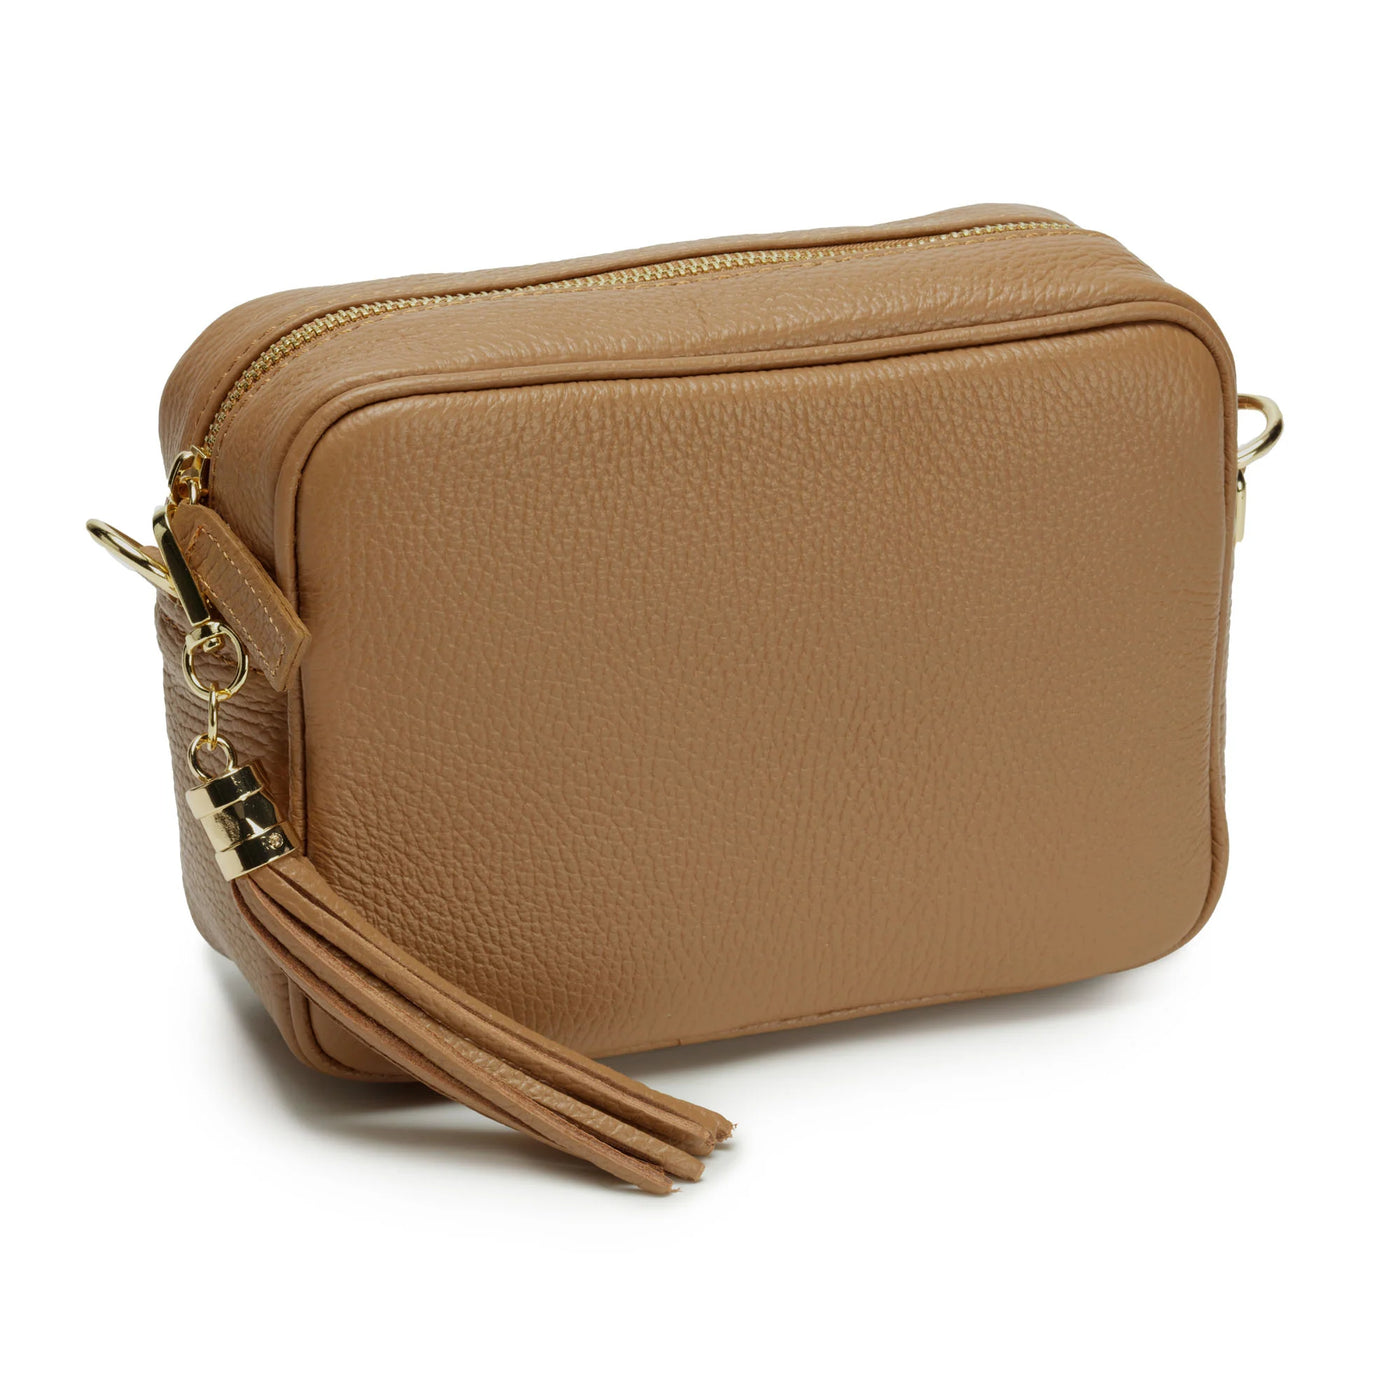 Elie Beaumont Designer Leather Crossbody Bag - Camel (GOLD Fittings)